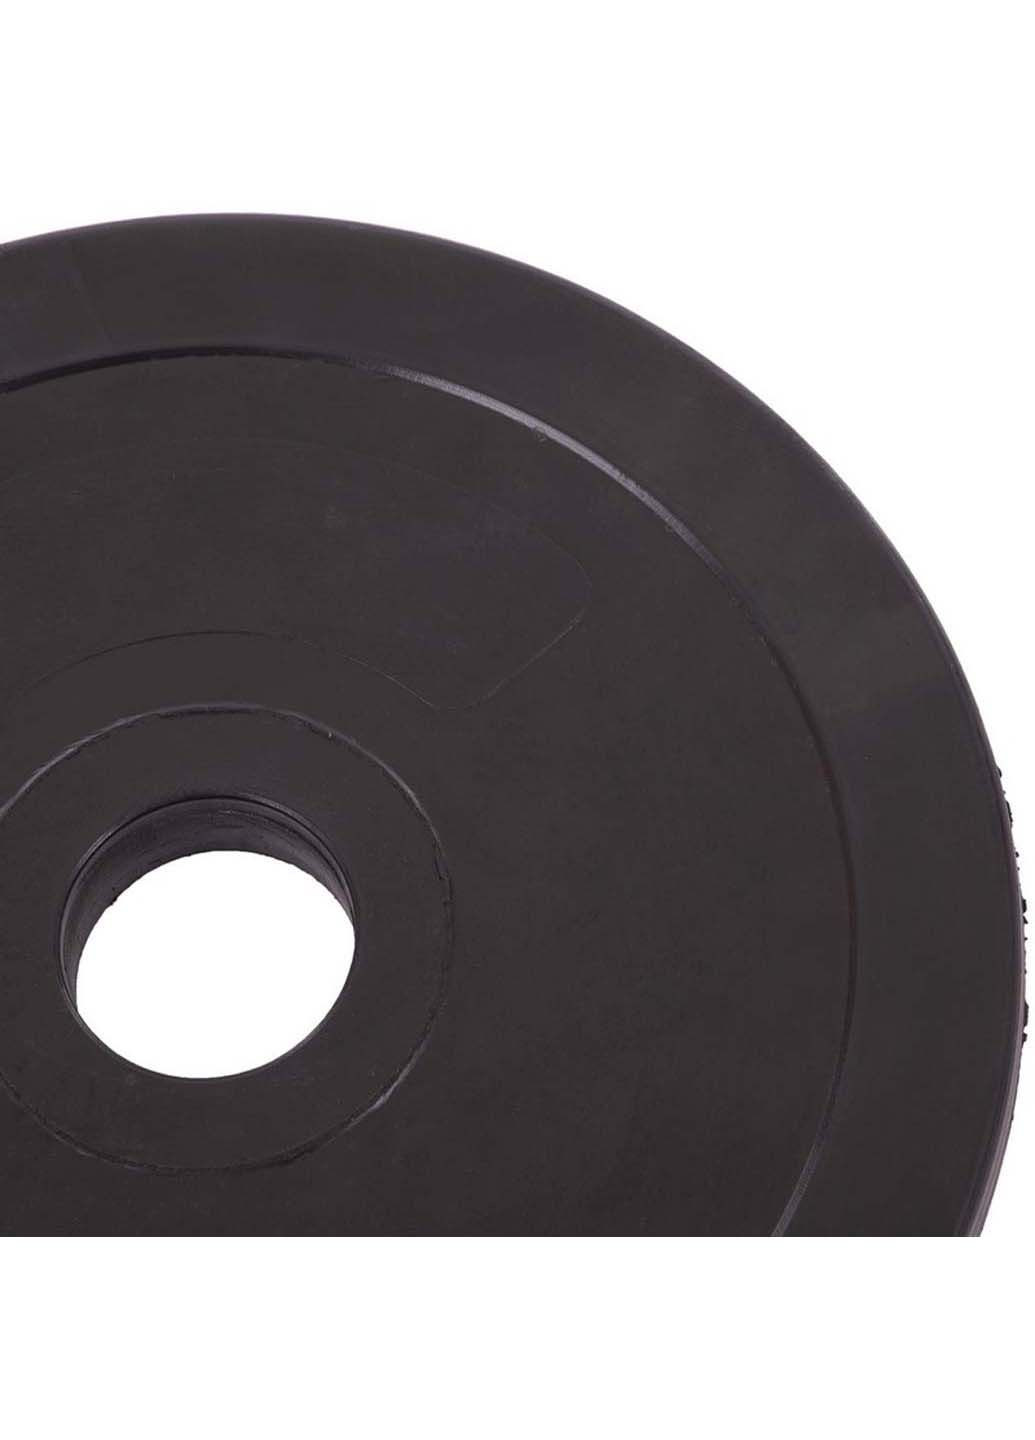 Млинці диски гумові Shuang Cai Sports TA-1447 10 кг FDSO (286043805)